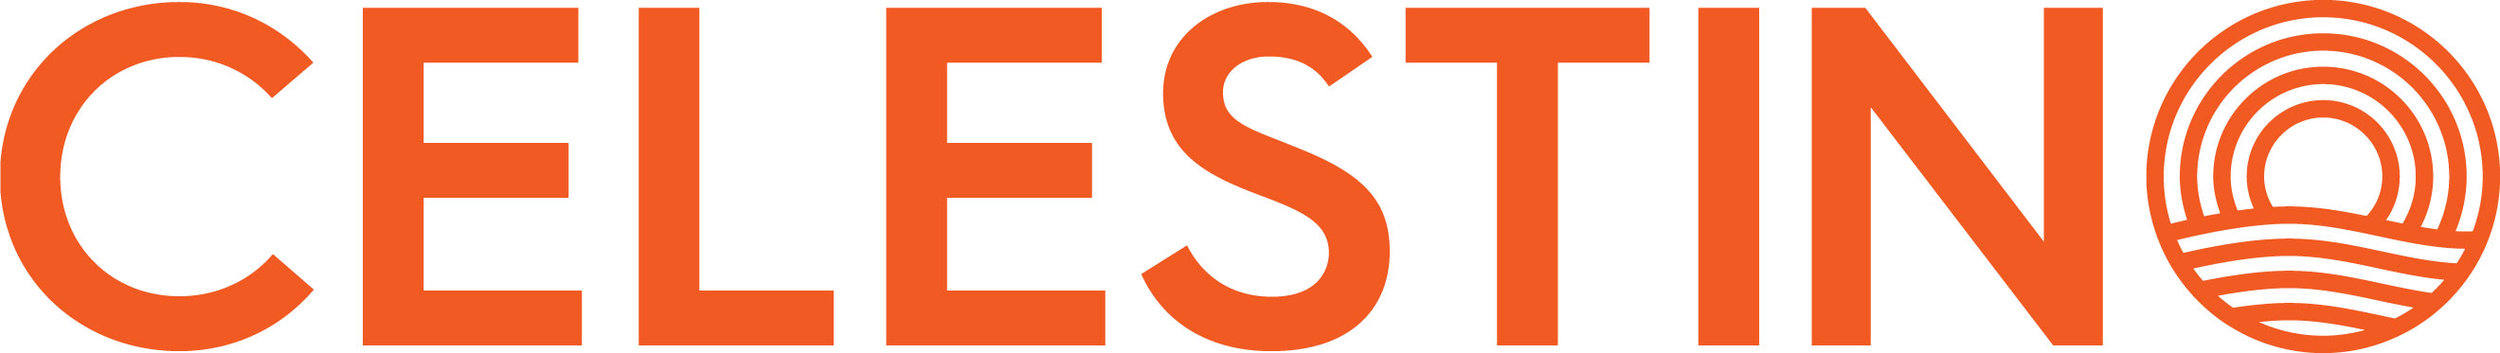 Celestino Partner Logo